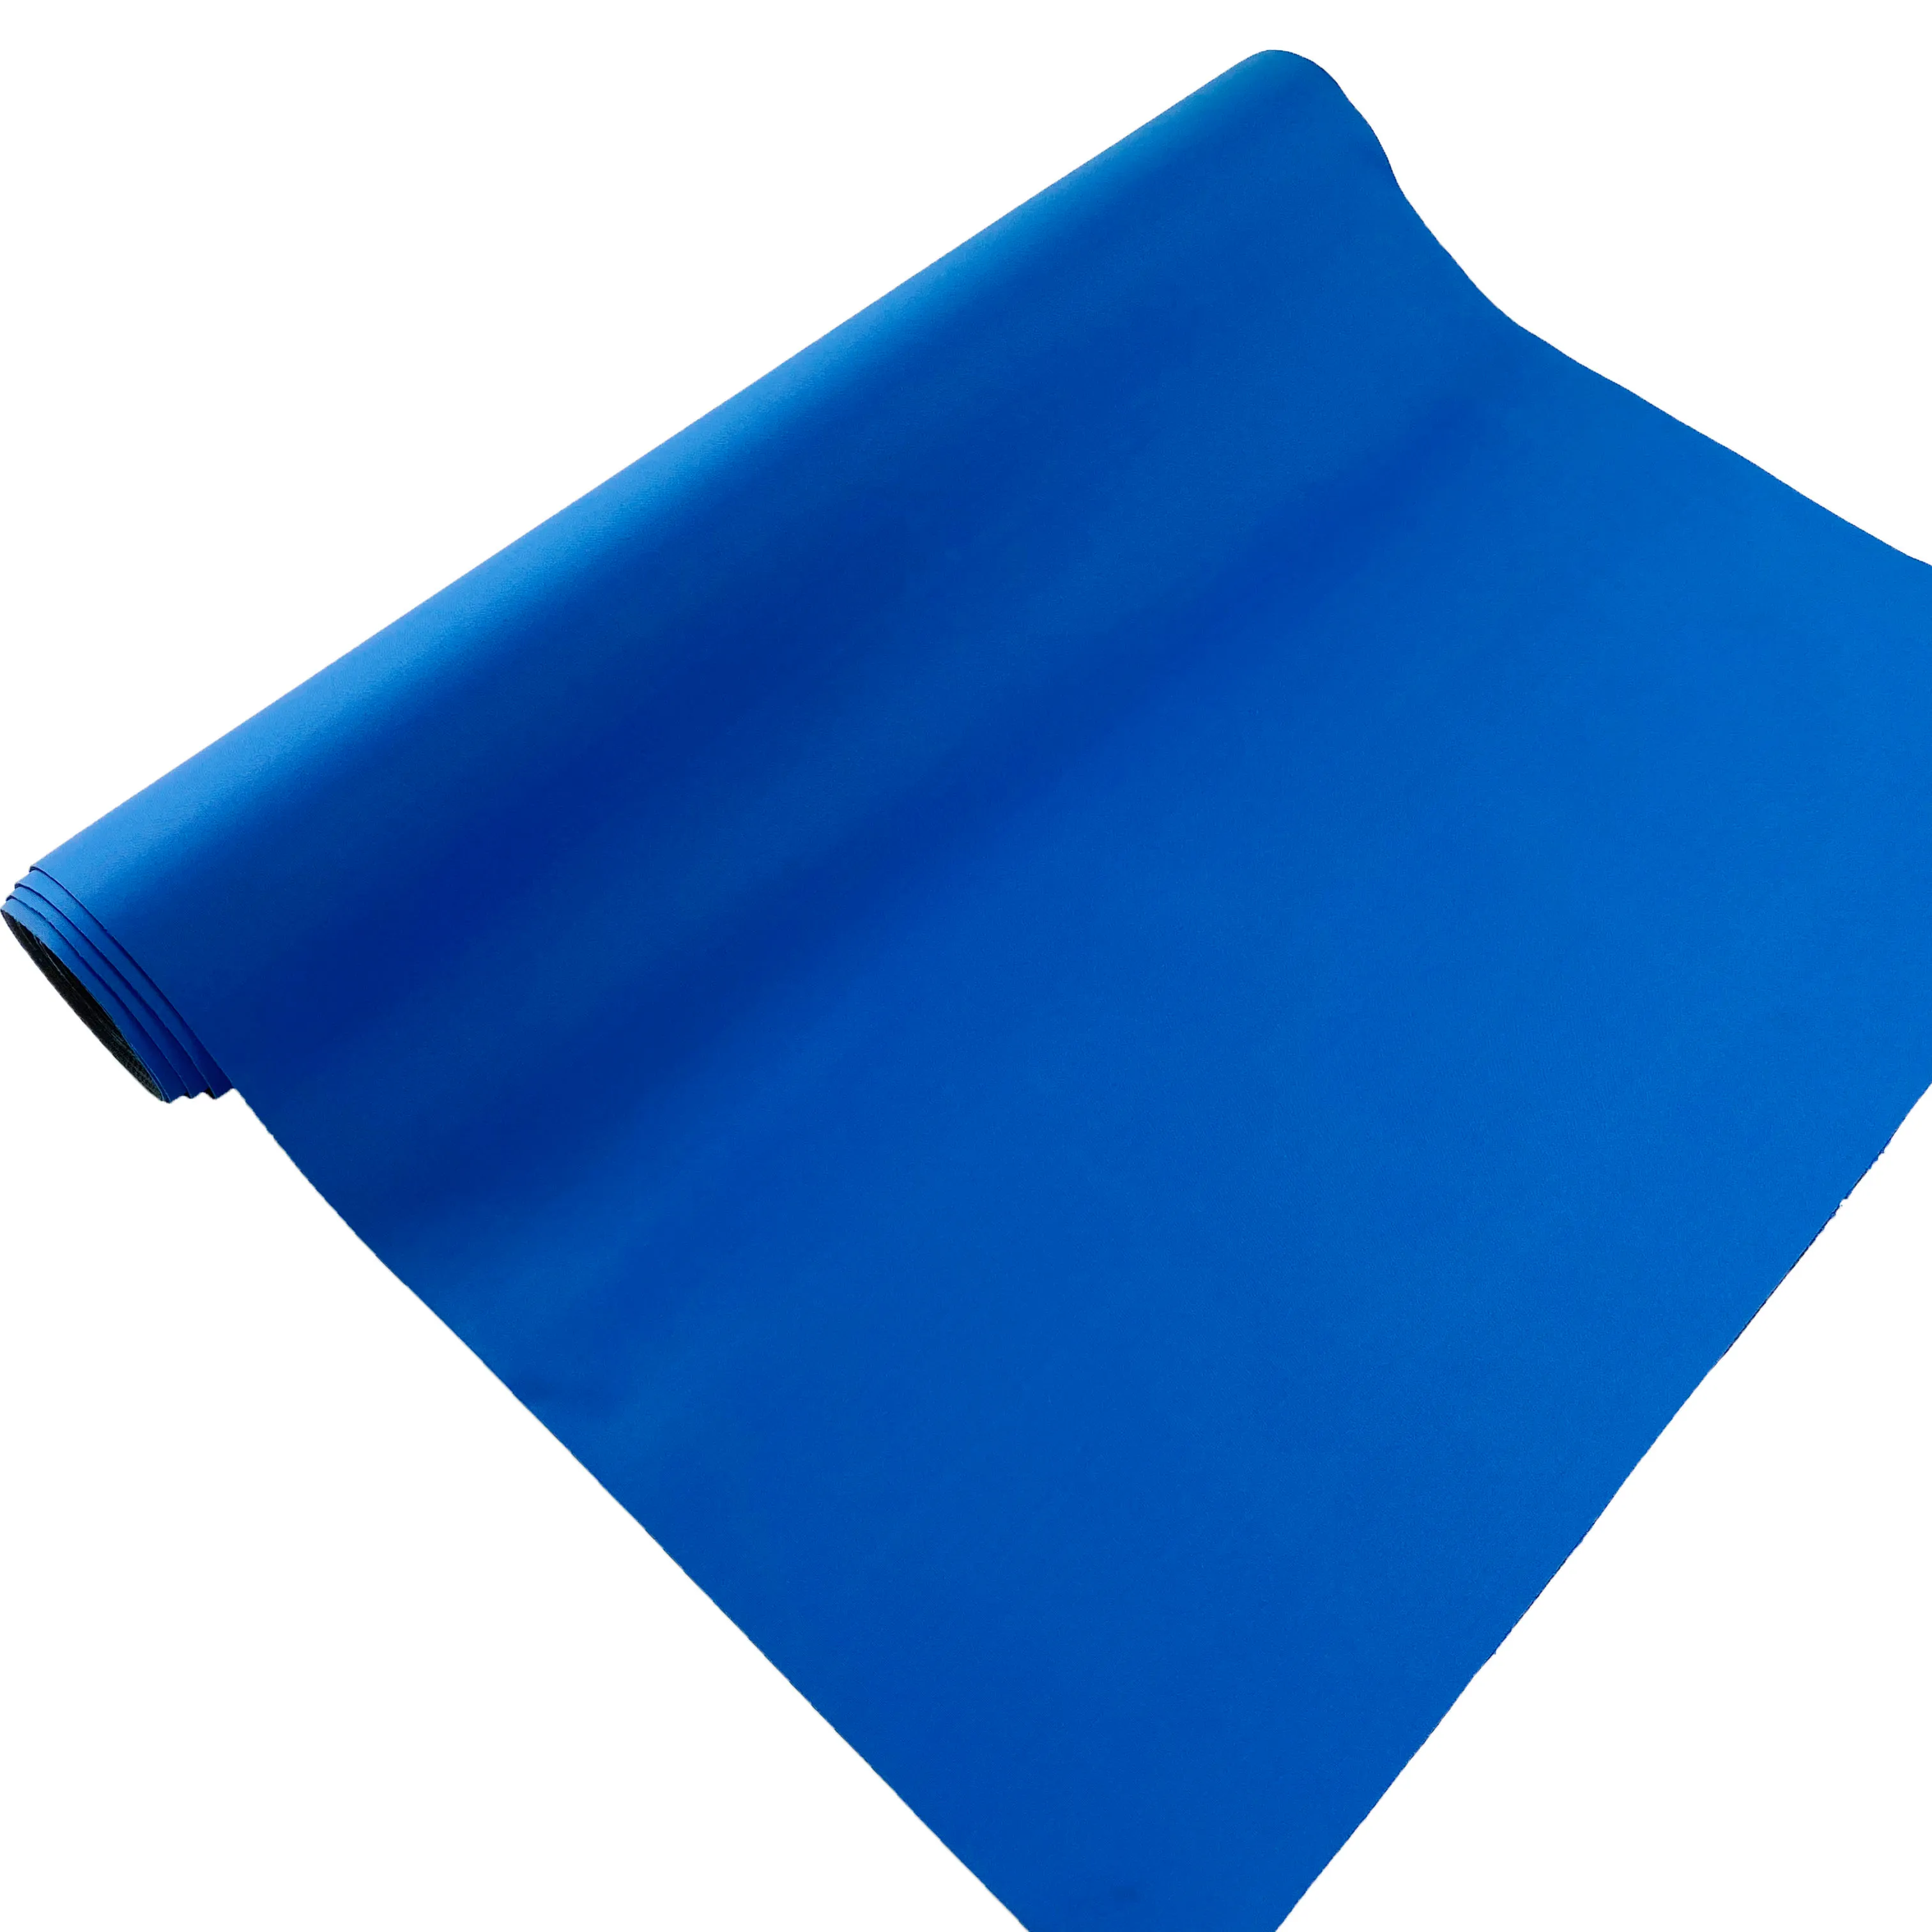 Tapete de neopreno azul para proteger alfombras, linóleo, azulejo, laminado, 27 "X 15" X 1,5 MM